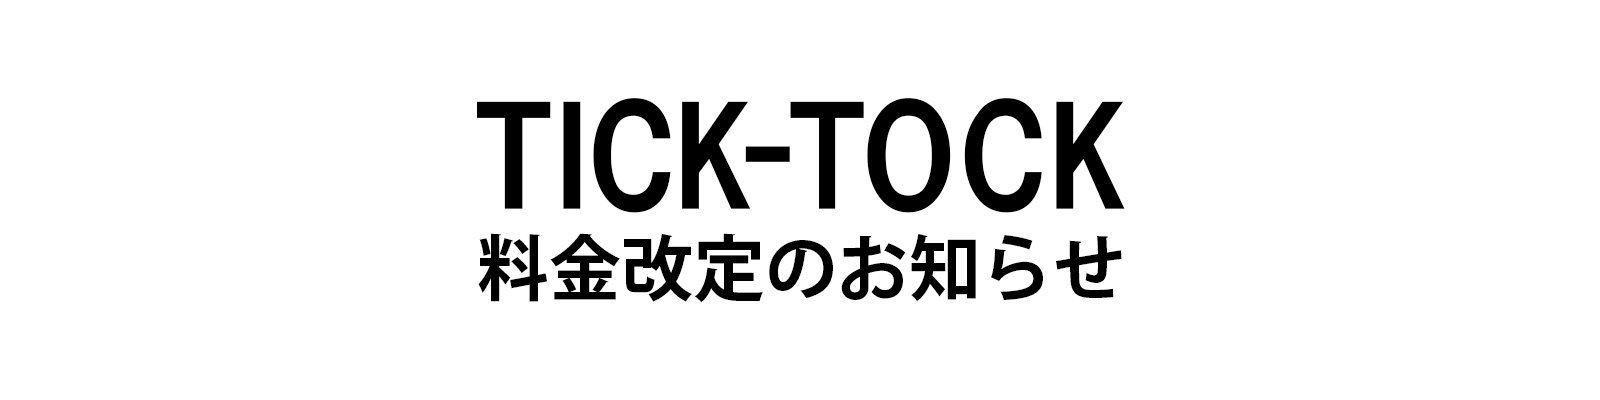 TICK-TOCK 料金改定のお知らせ